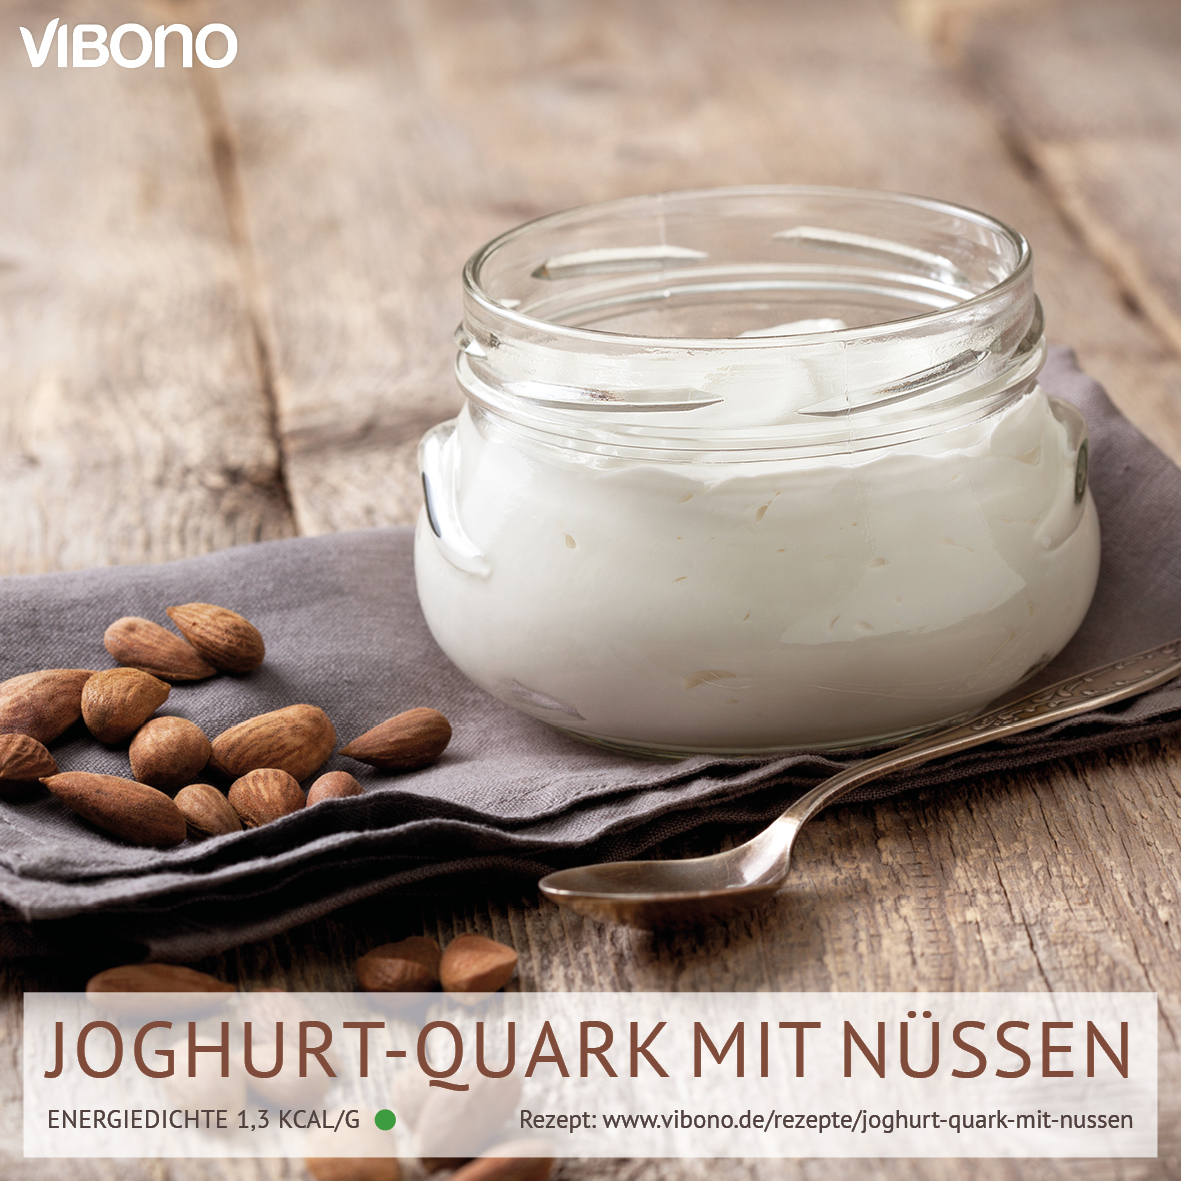 Joghurt-Quark mit Nüssen